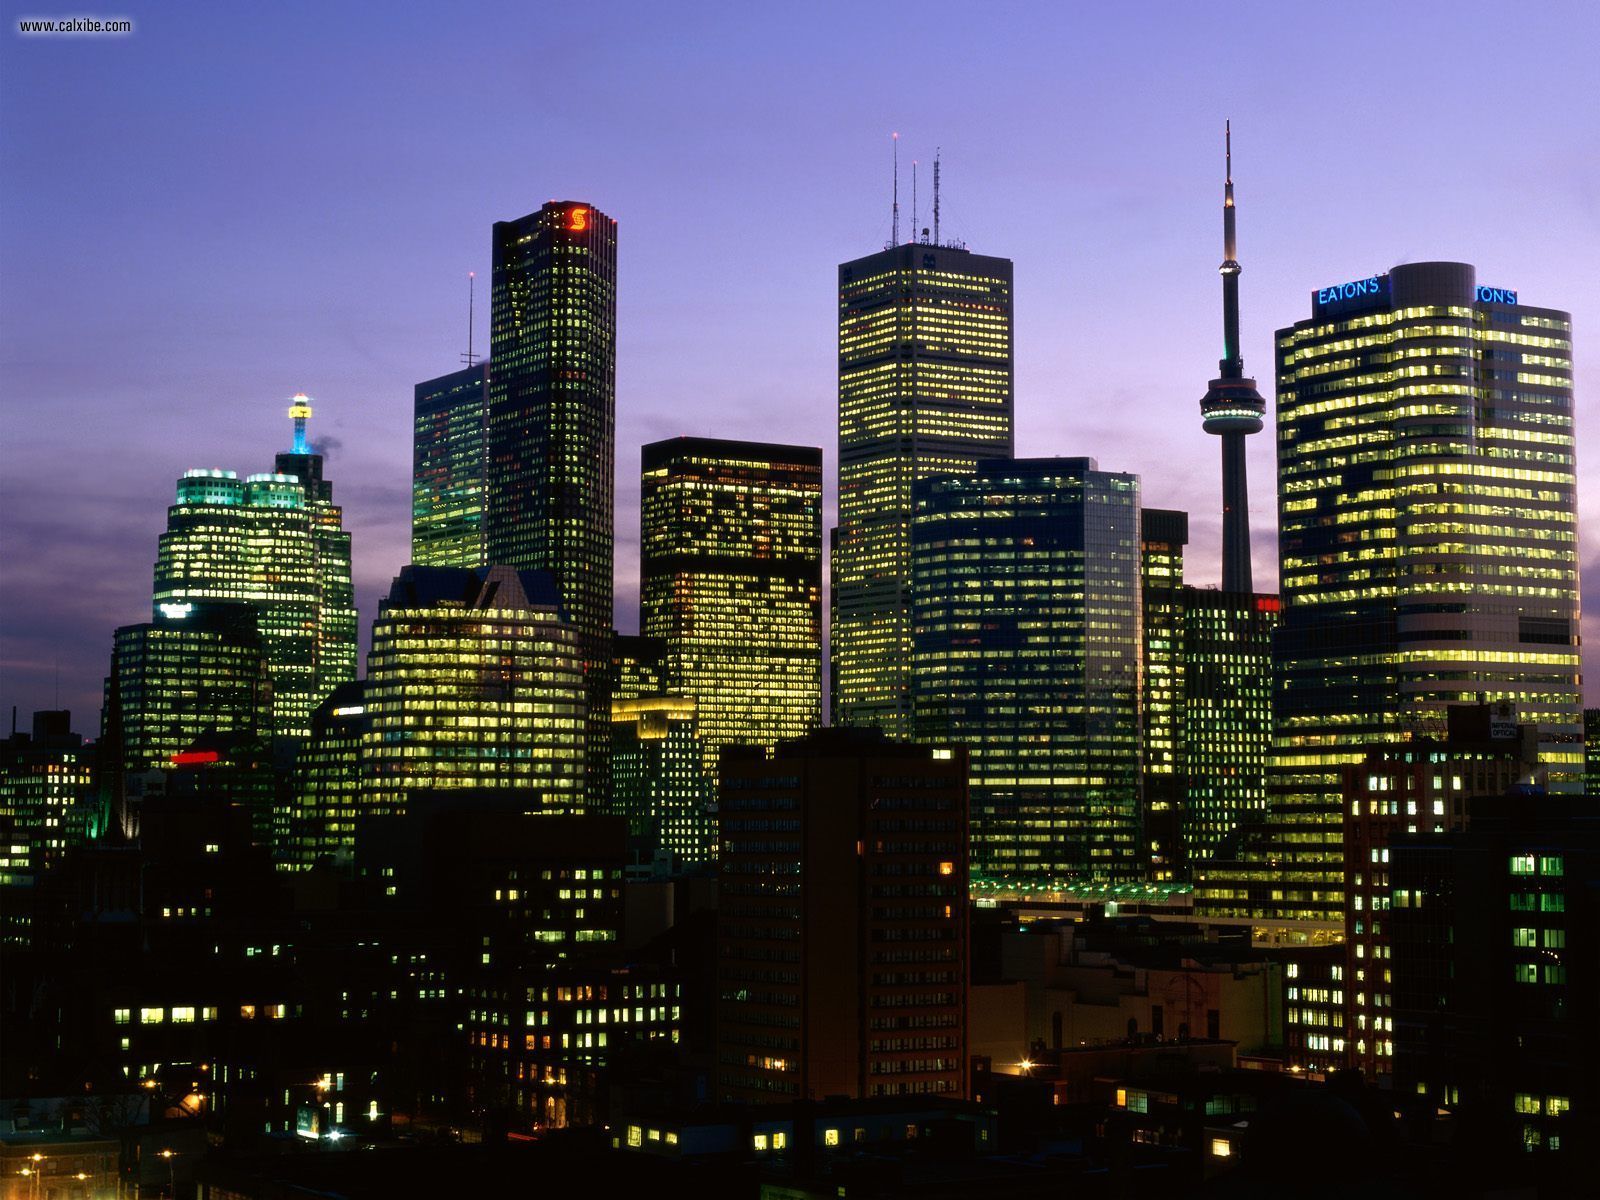 Buildings City Night Falls Over Toronto Ontario picture nr 20600 1600x1200